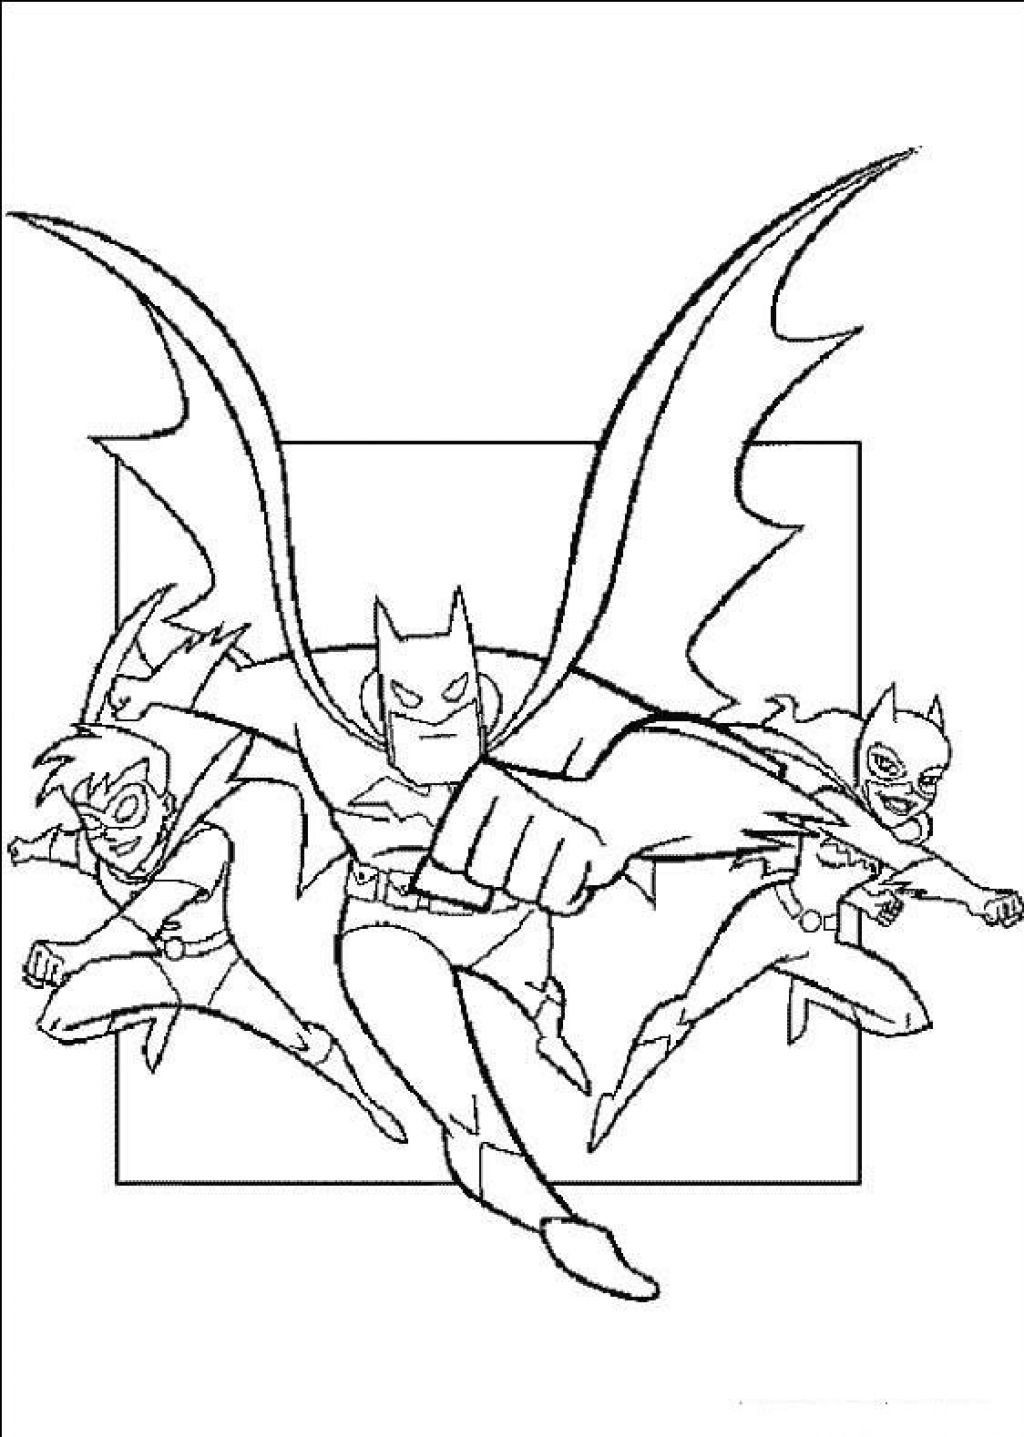  Faster Batman Coloring Pages | Batman movie coloring pages |